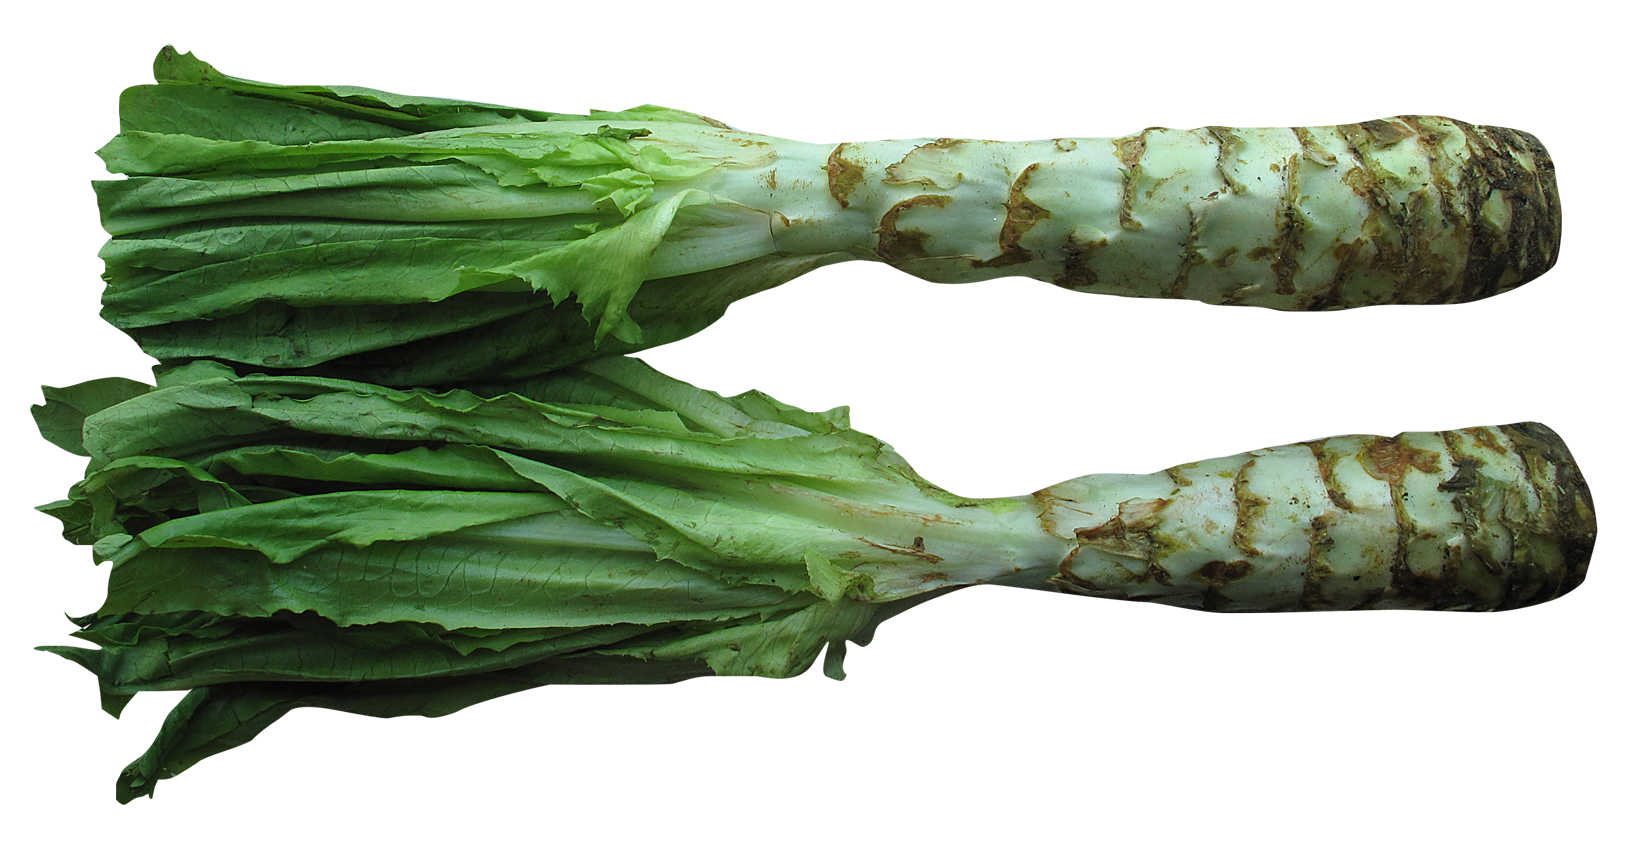 Celtuce png image purepng. Lettuce clipart collard greens